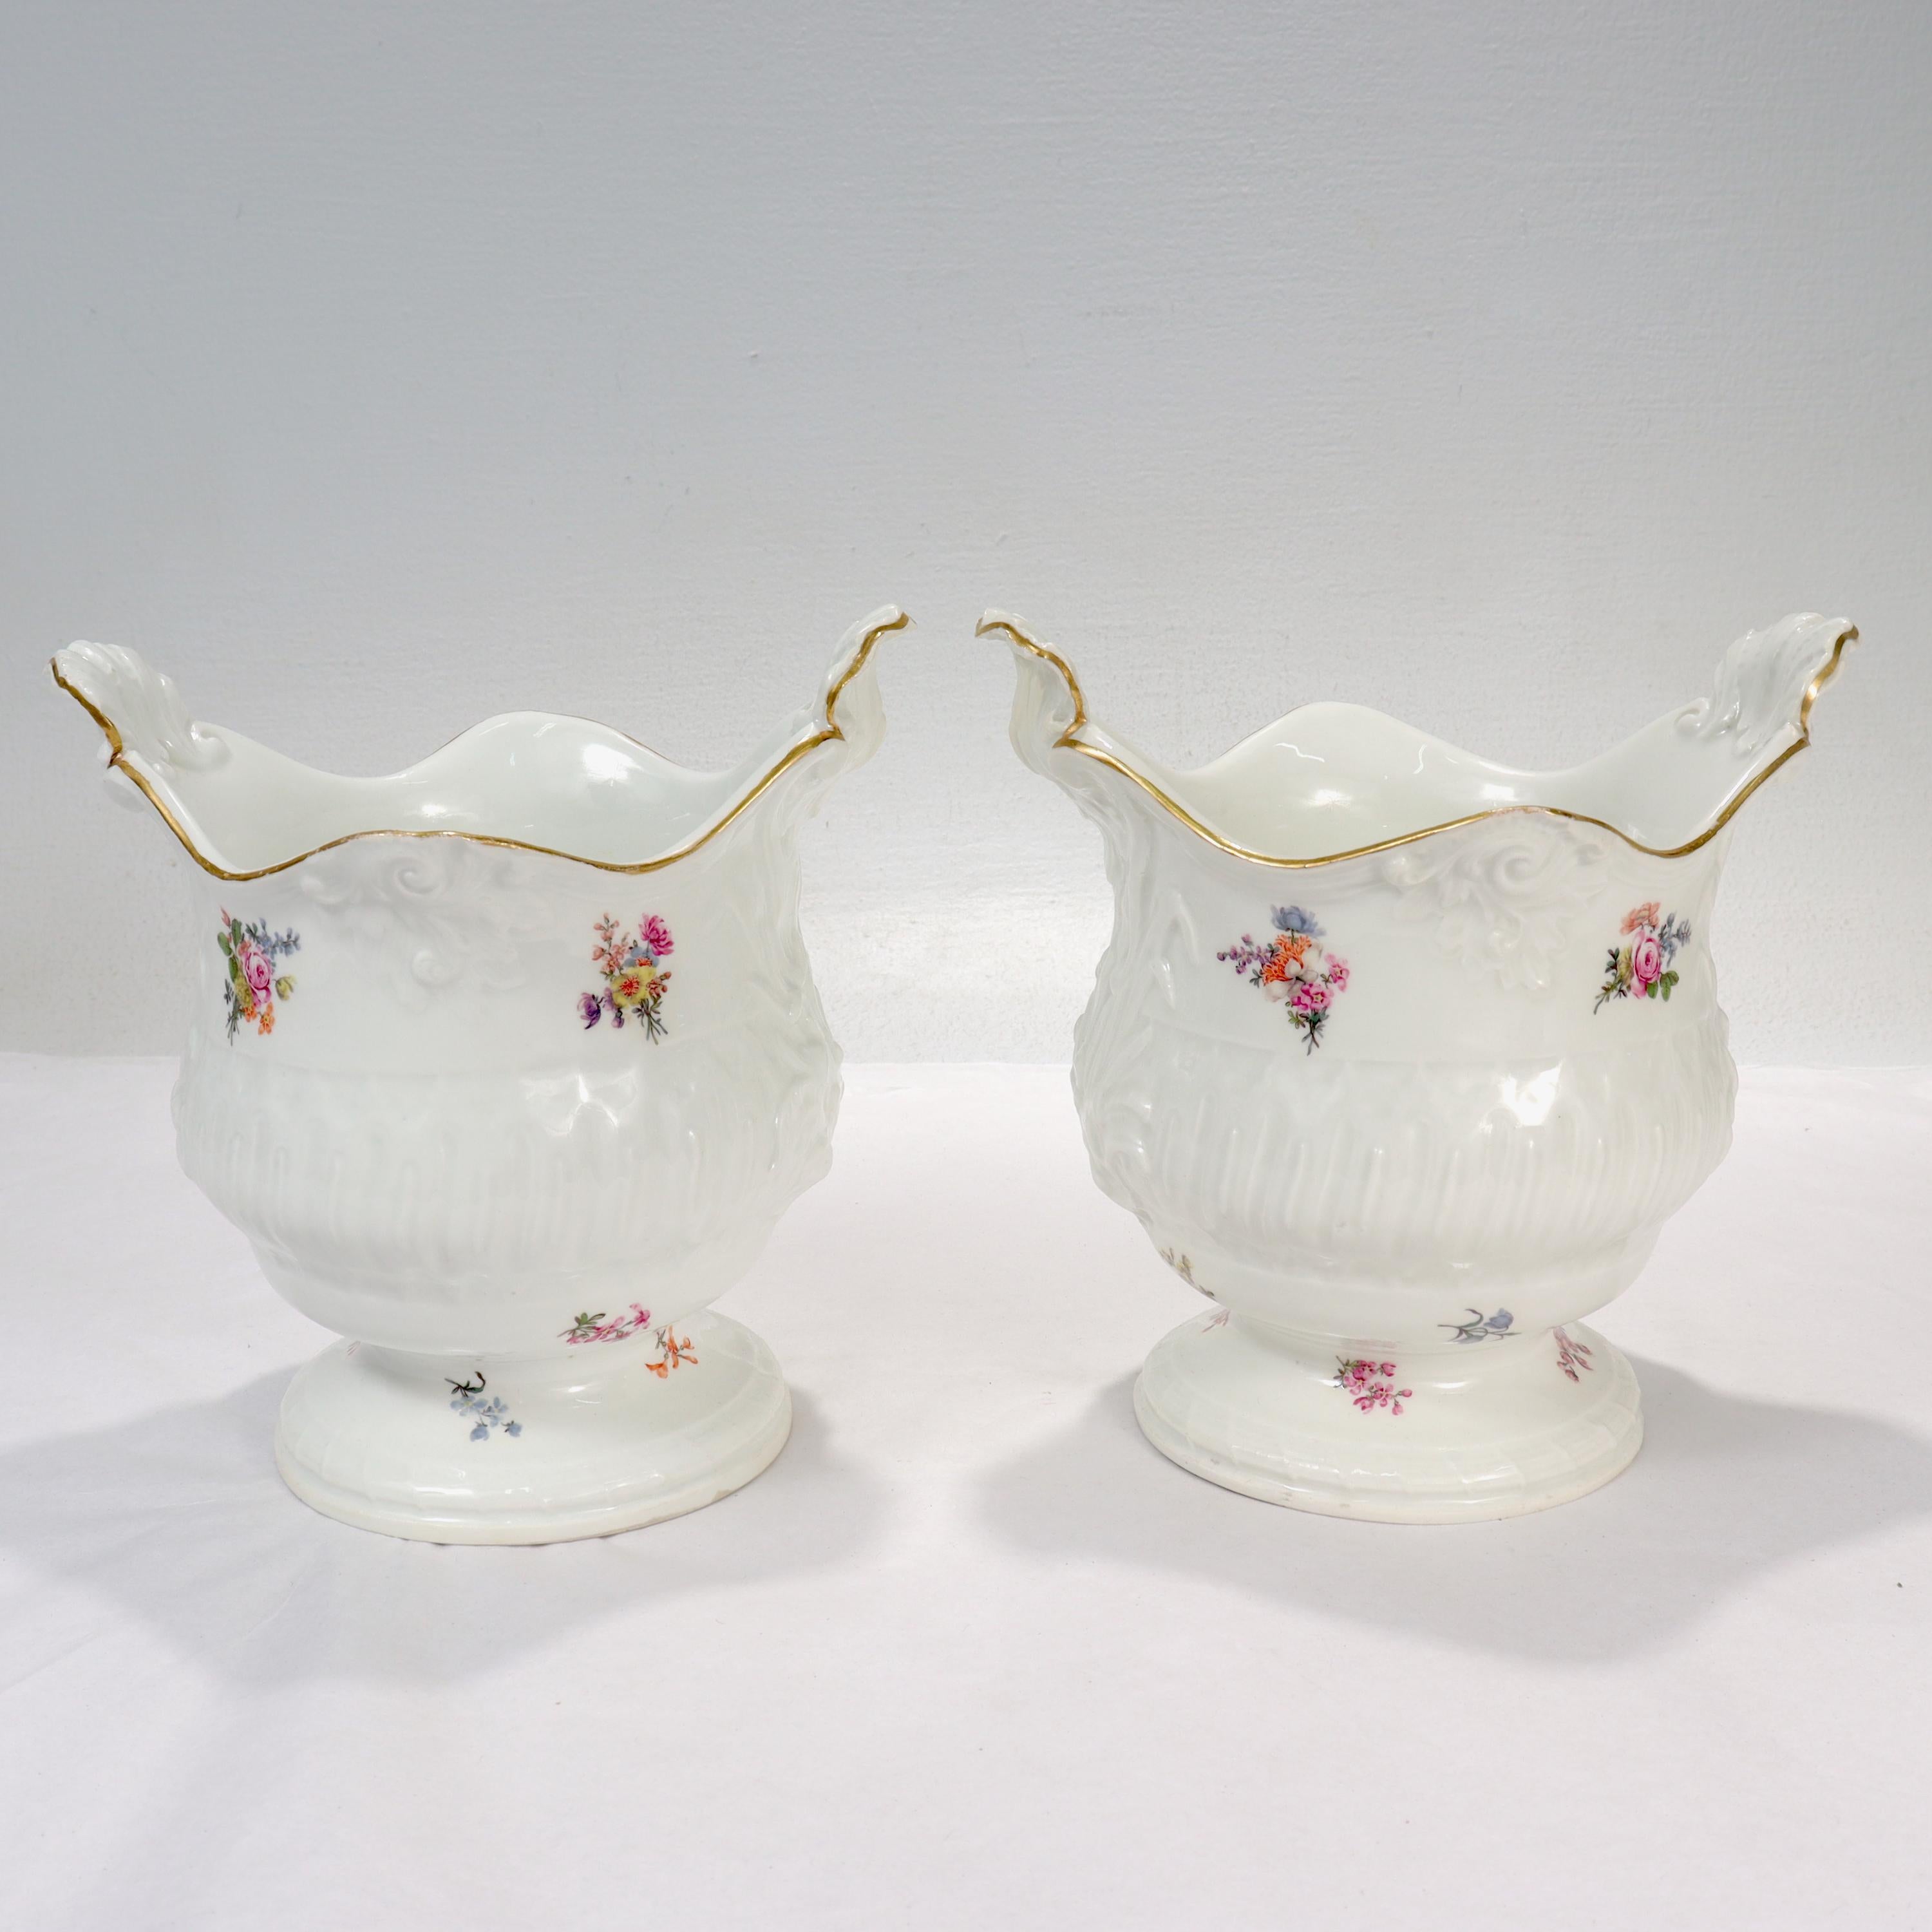 Hand-Painted Pair of Antique 18th / 19th Century Meissen Porcelain Cachepots or Flower Pots For Sale